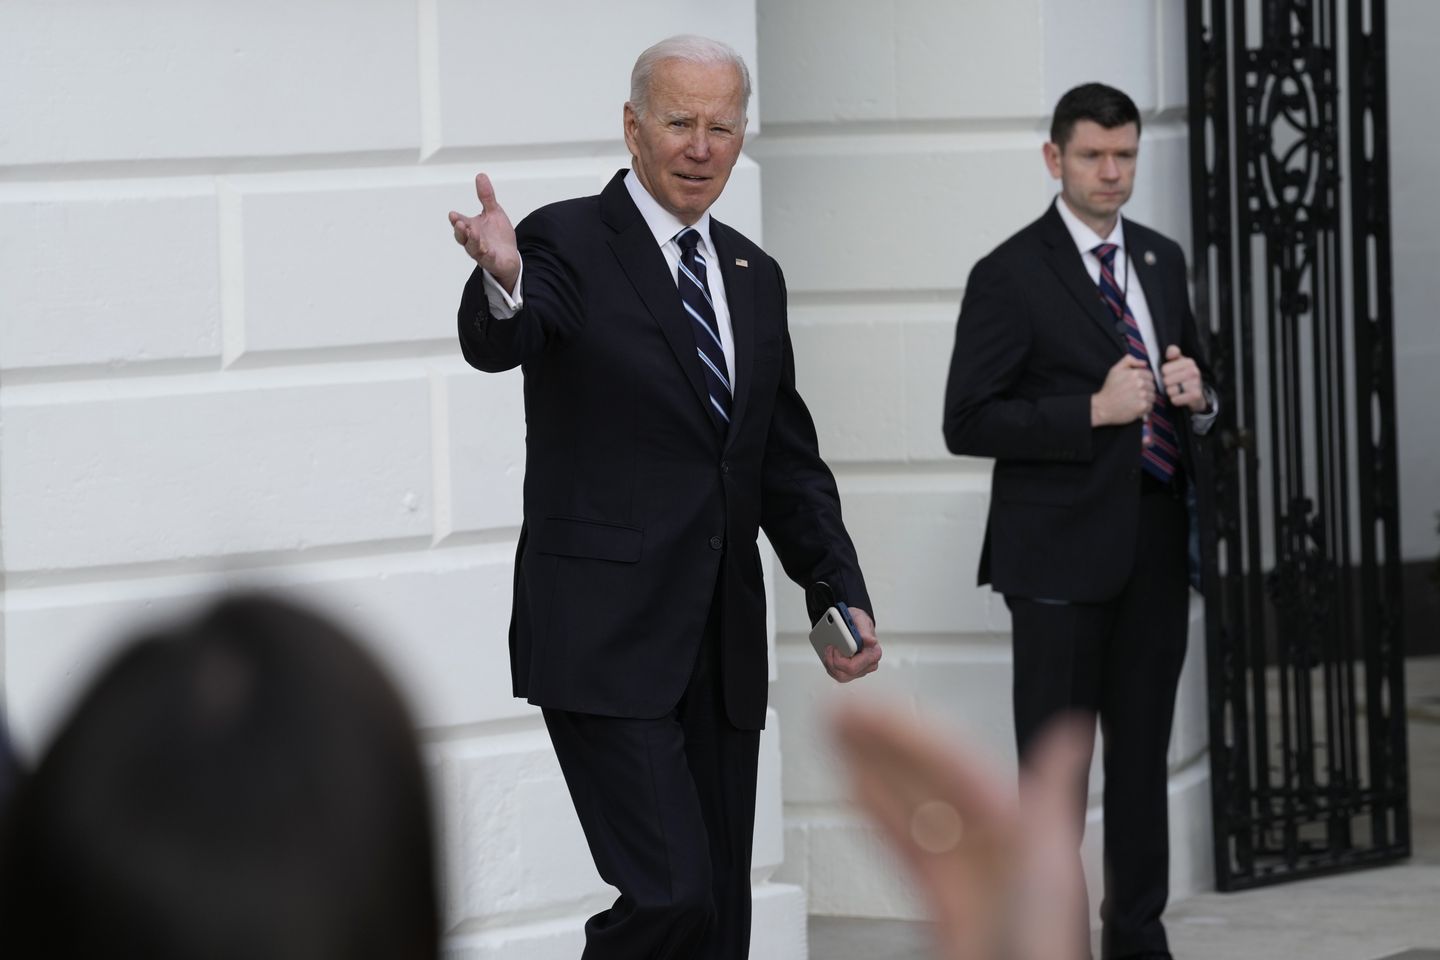 Top secret material recovered in Biden's classified stash: Report